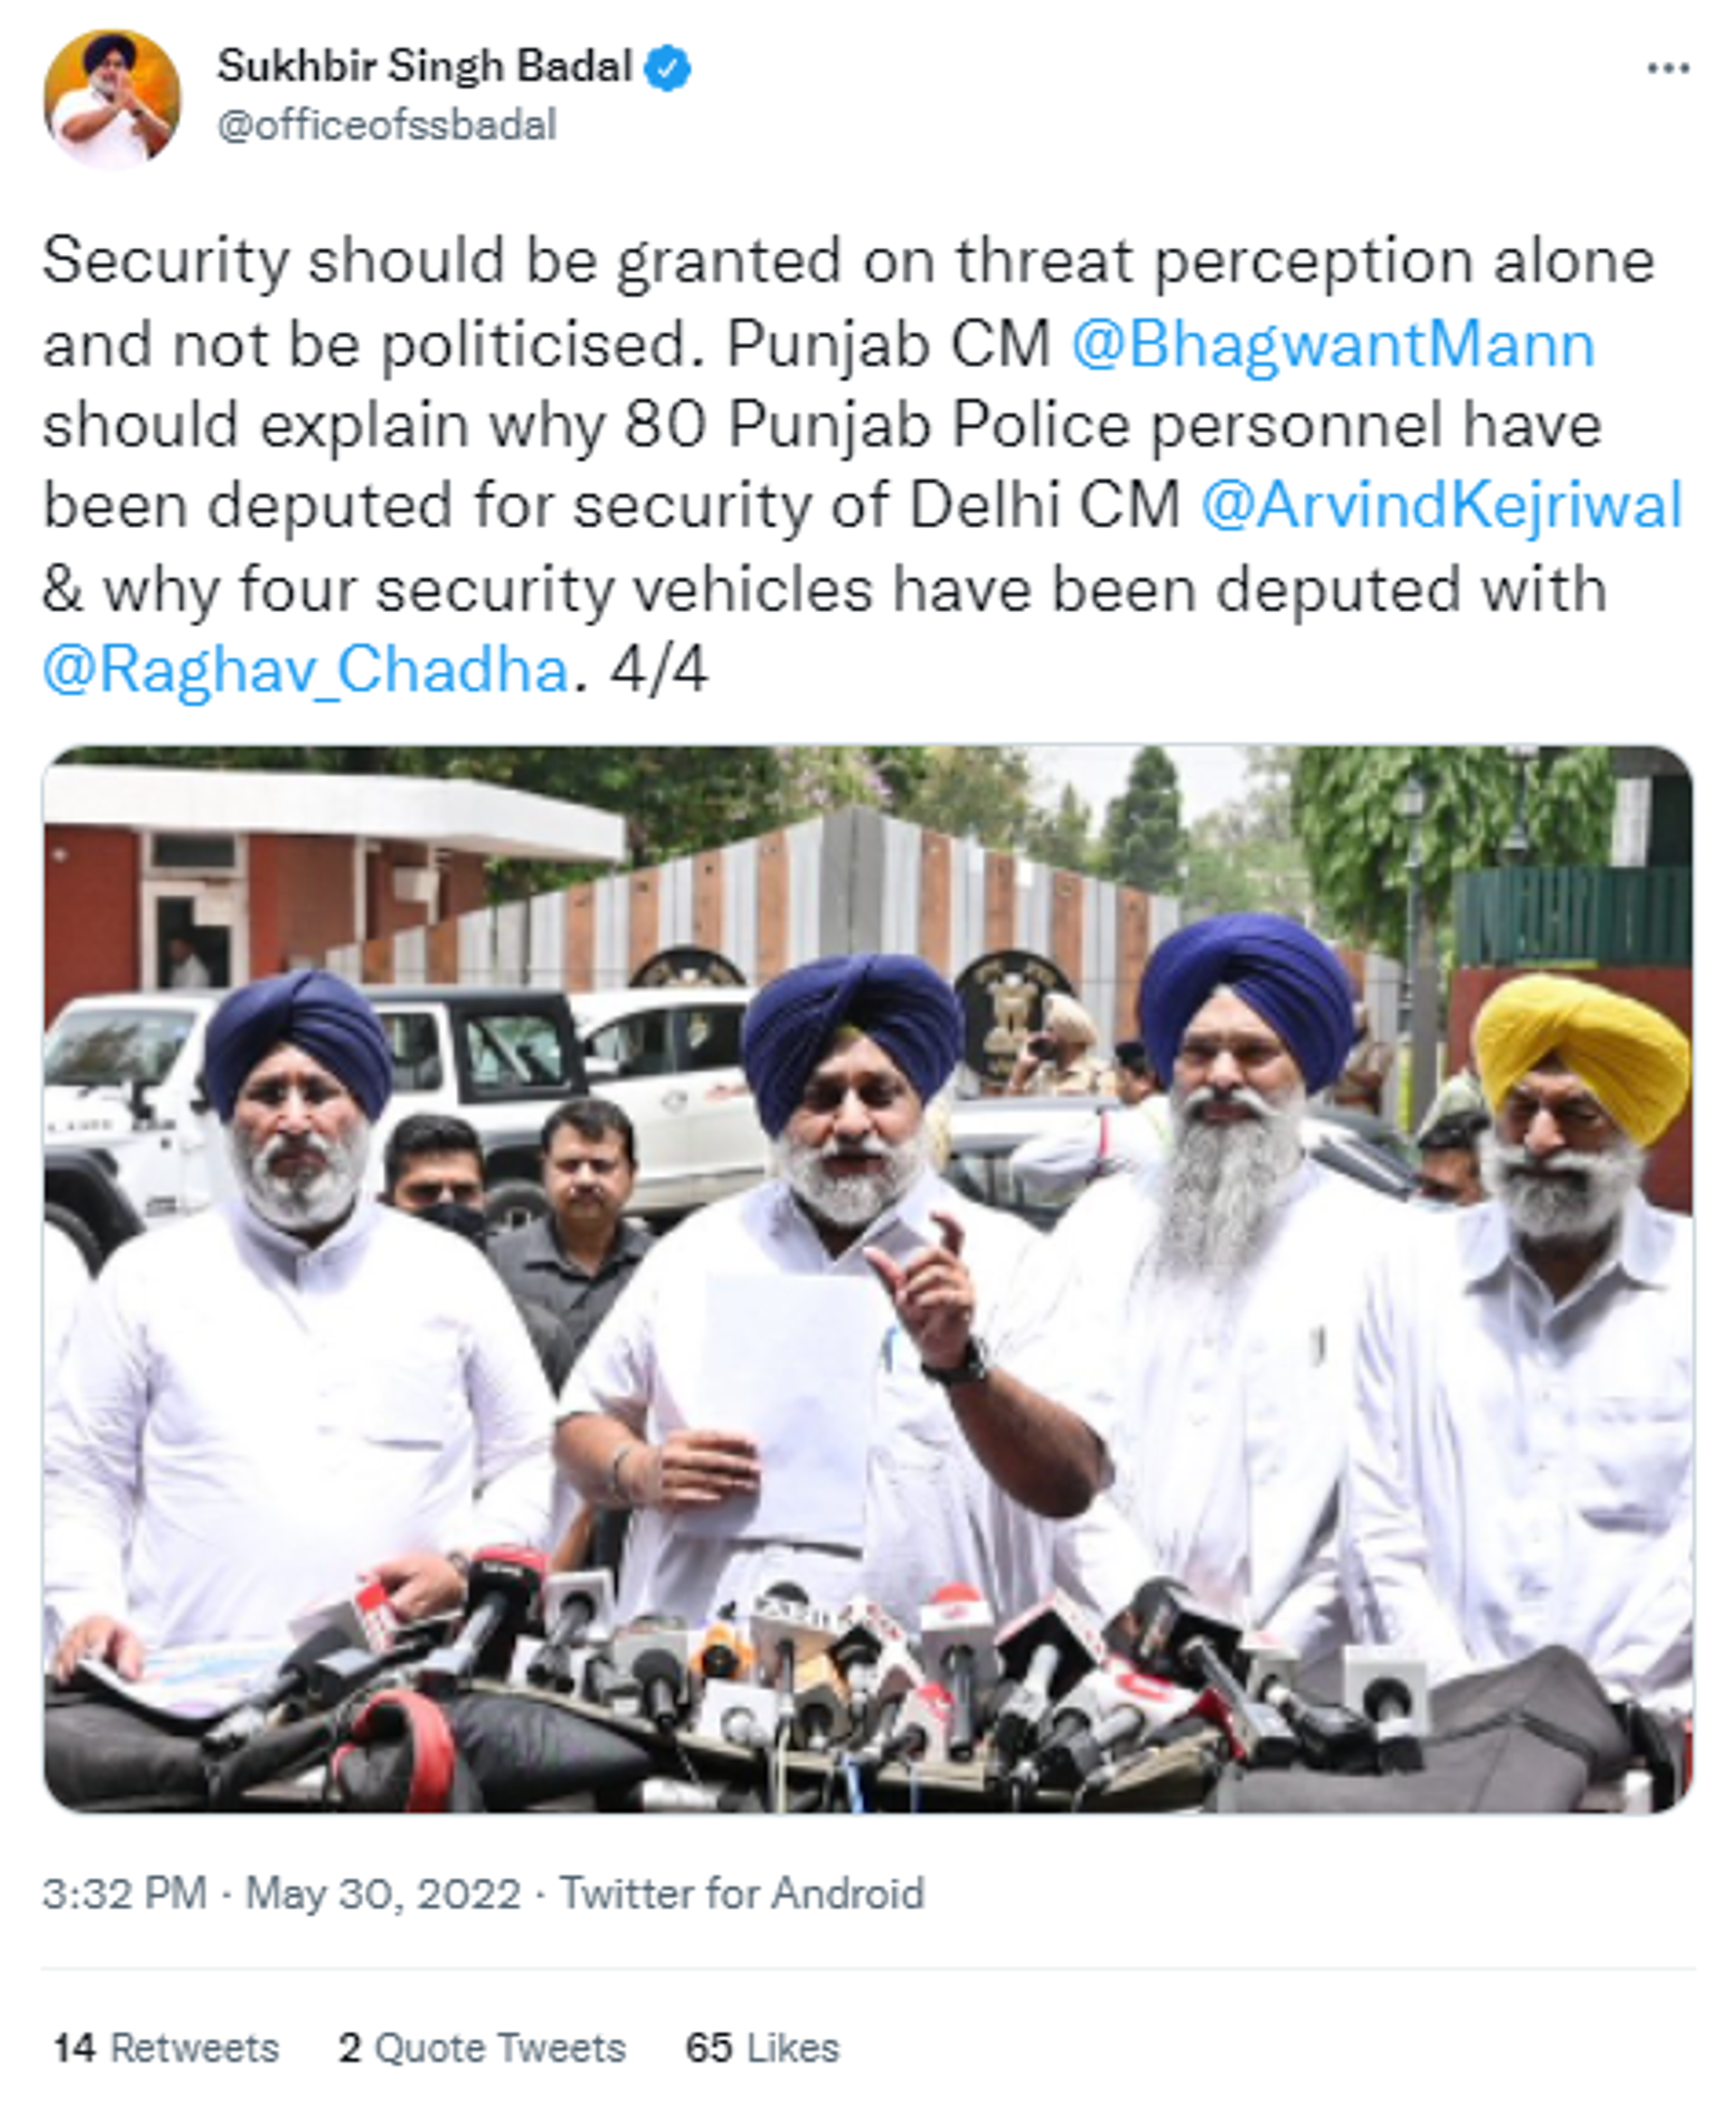 Shiromani Akali Dal Chief Sukhbir Singh Badal Questions Security Given to Delhi State Chief Arvind Kejriwal - Sputnik International, 1920, 30.05.2022